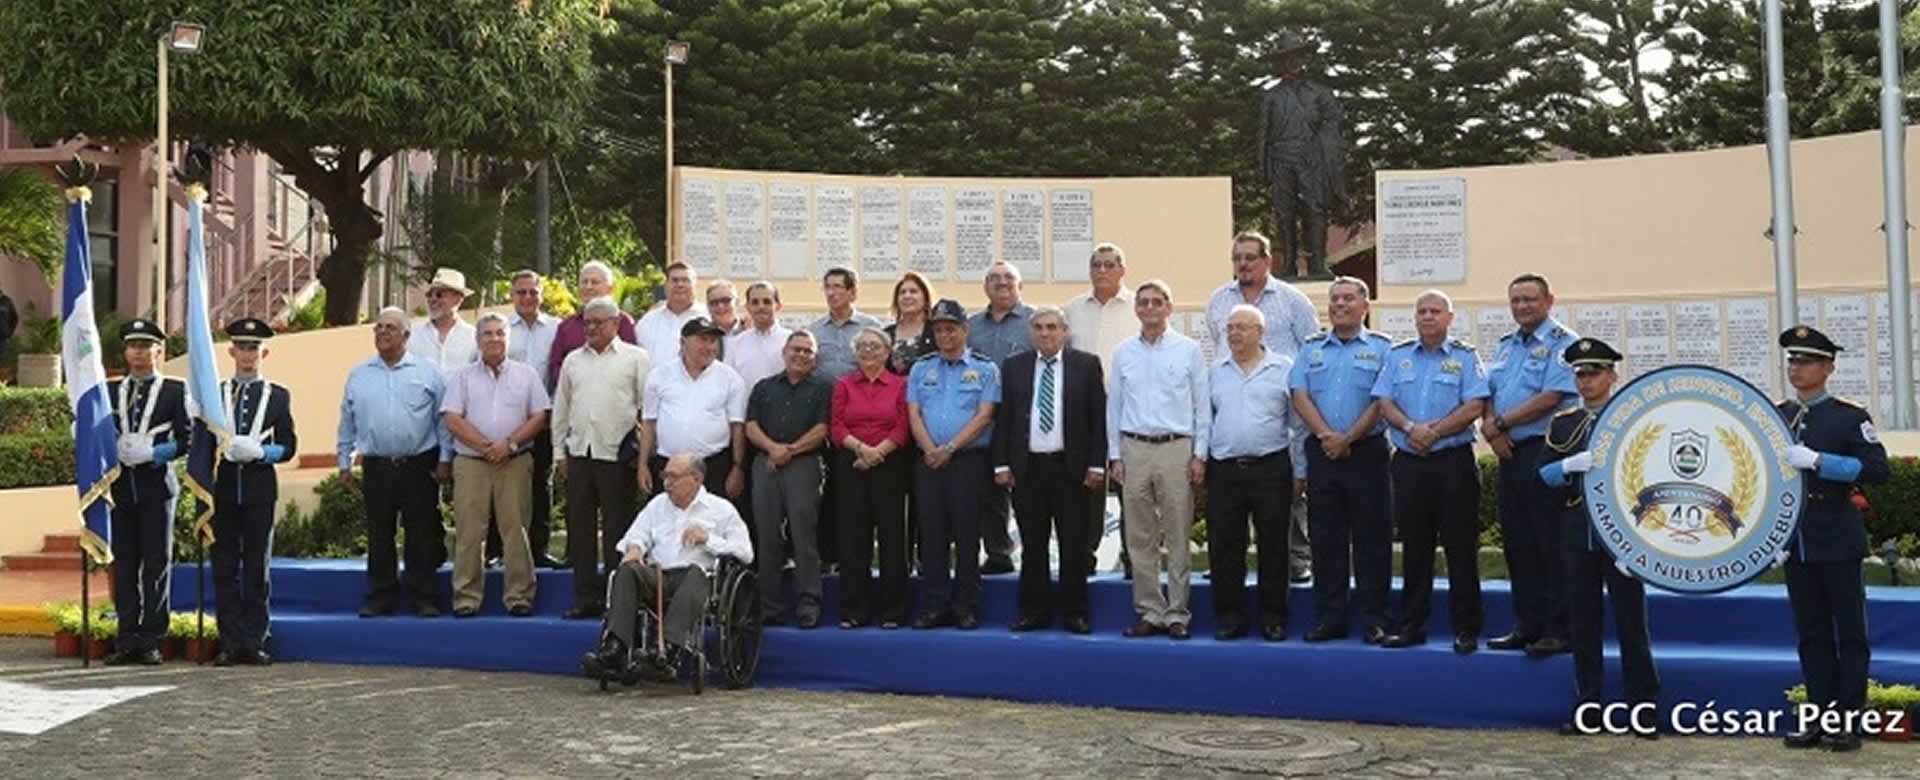 Policía Nacional entrega la Medalla 40 Aniversario a miembros en retiro